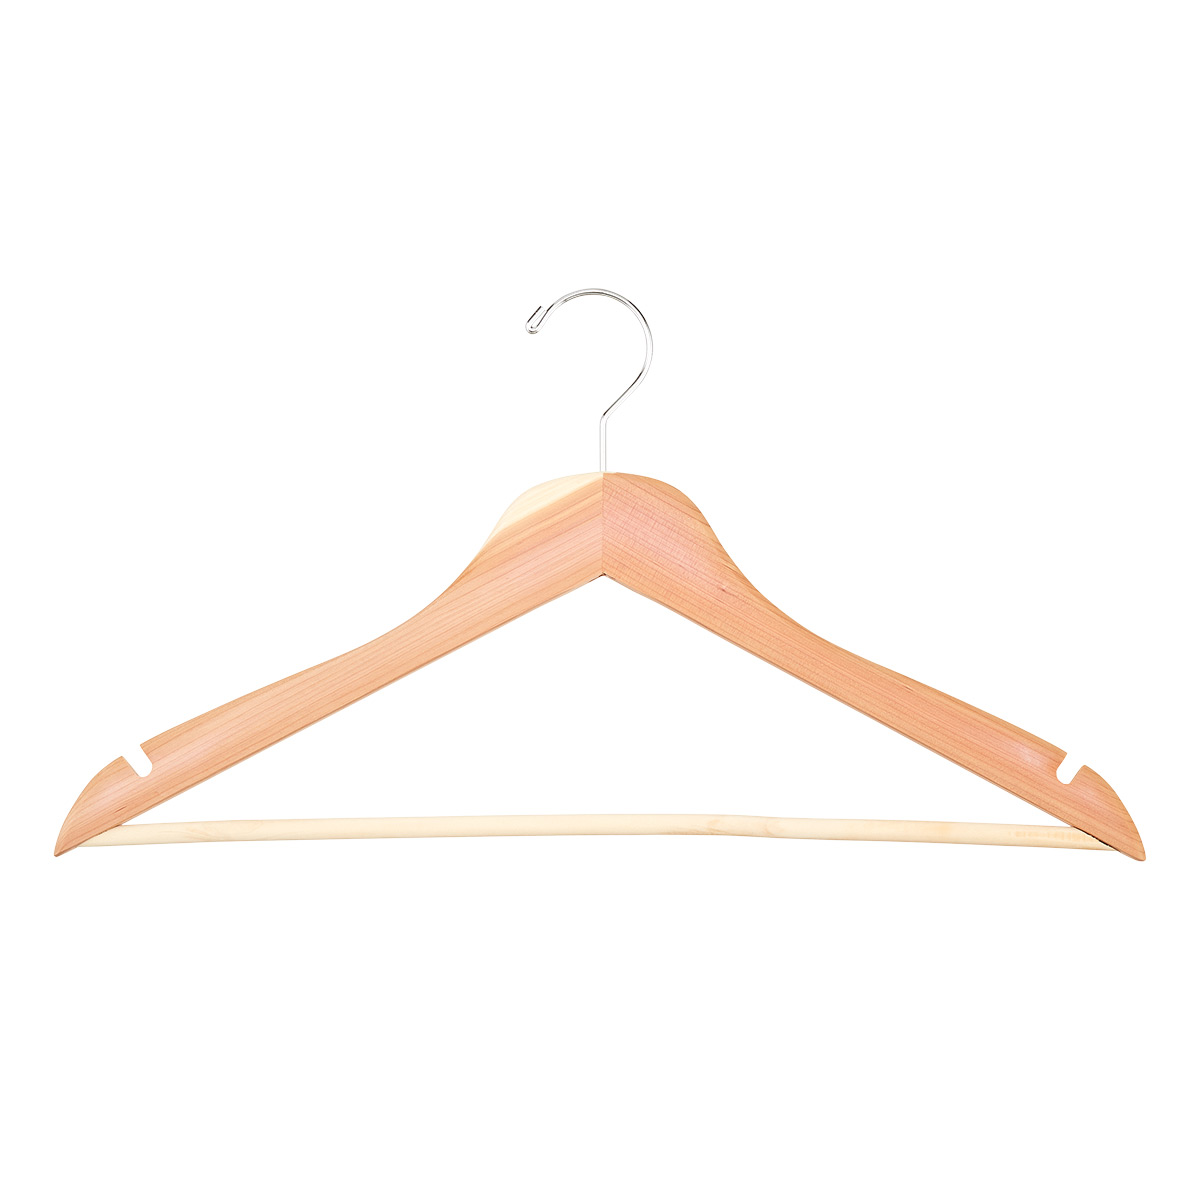 Basic Cedar Shirt Hangers Pkg/4 | The Container Store